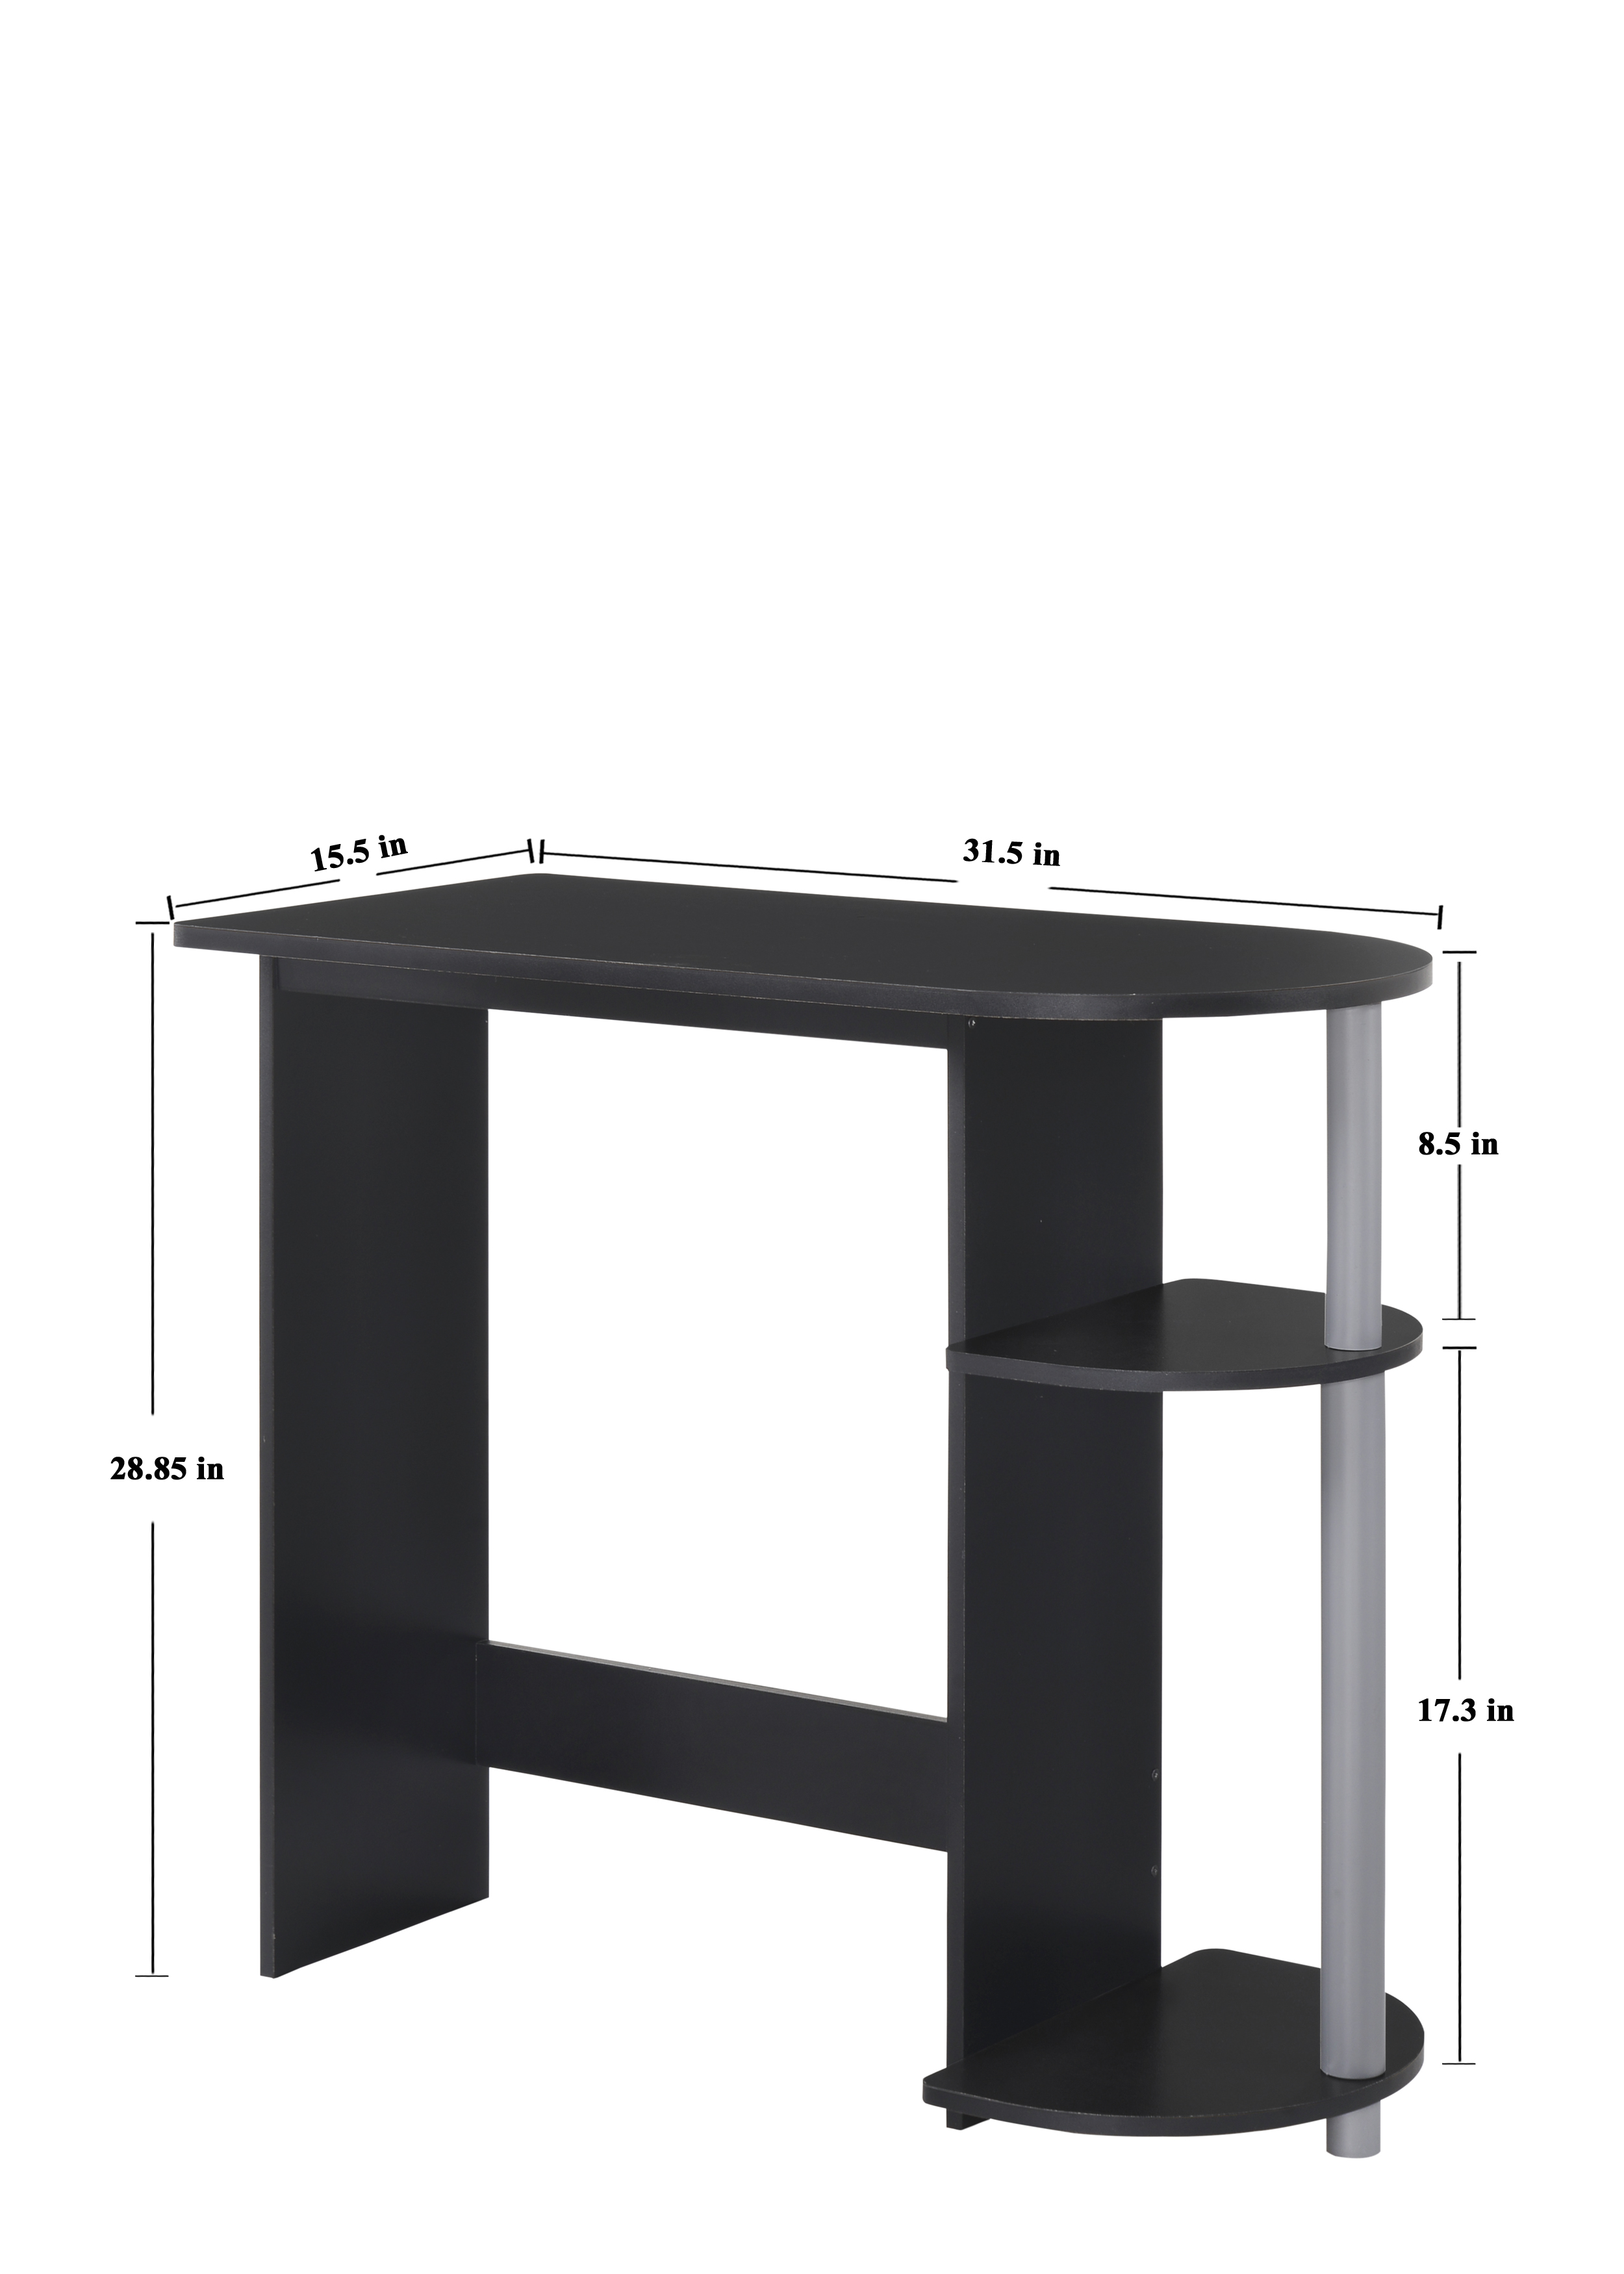 Mainstays Black Computer Desk with Built-in Shelves - image 2 of 6